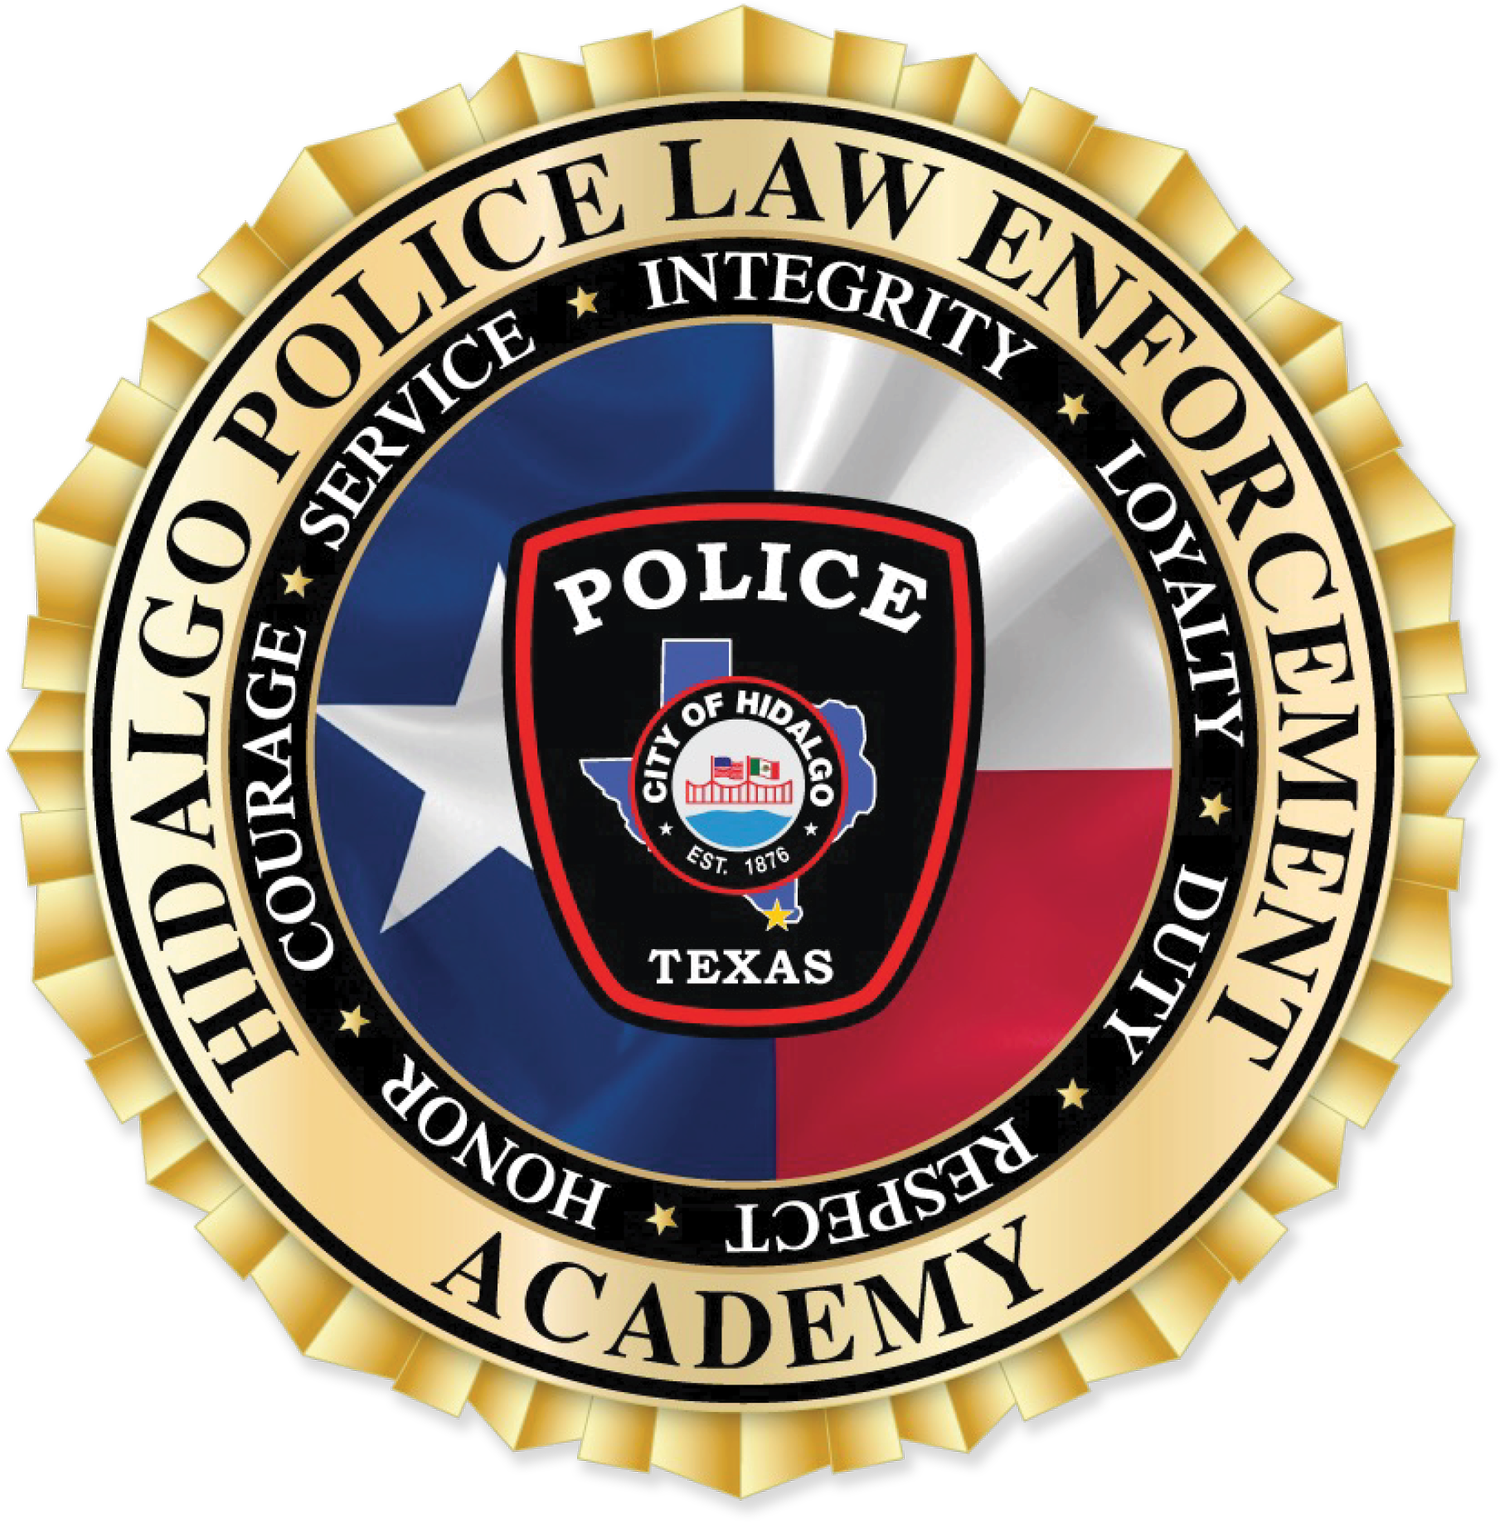 Hidalgo Police Department Law Enforcement Academy